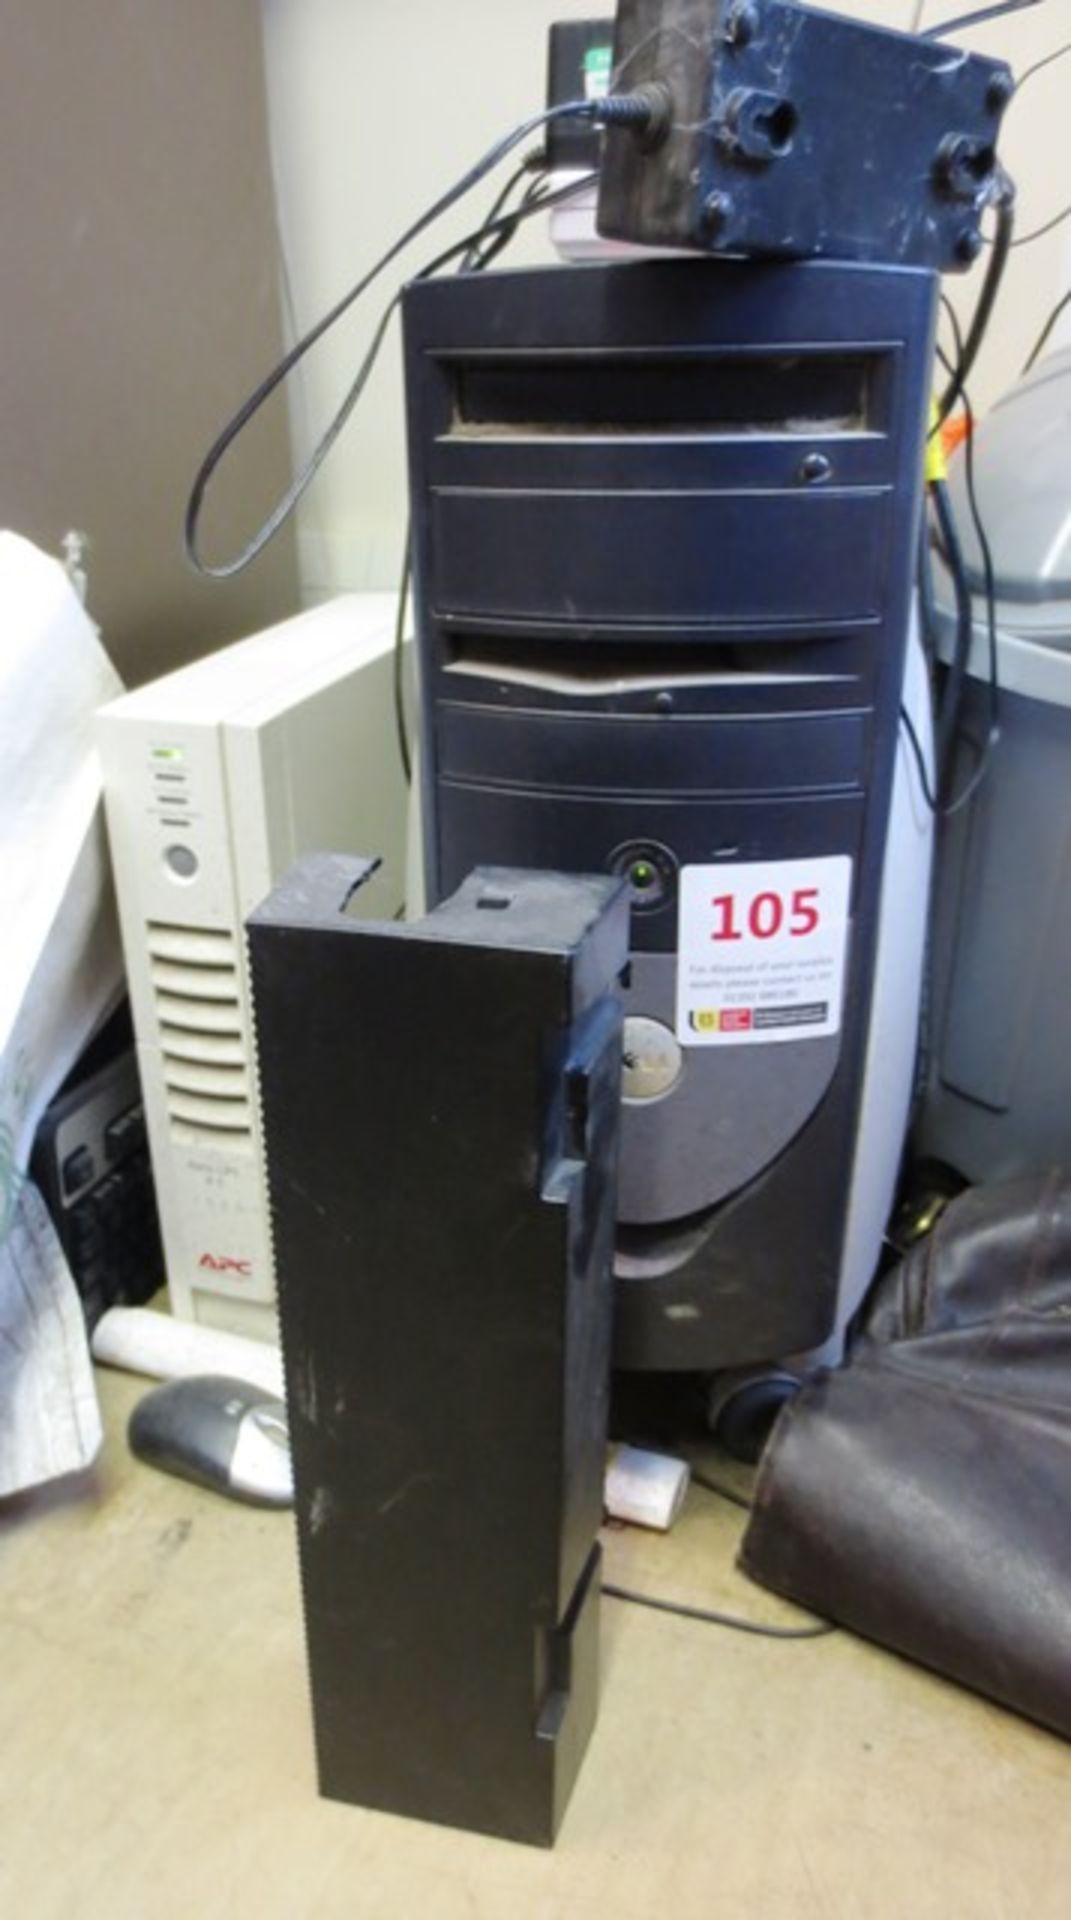 Dell Optiplex GX270 computer system/server, APC Back-UPS 1500 (located at Mill Street, South Molton,